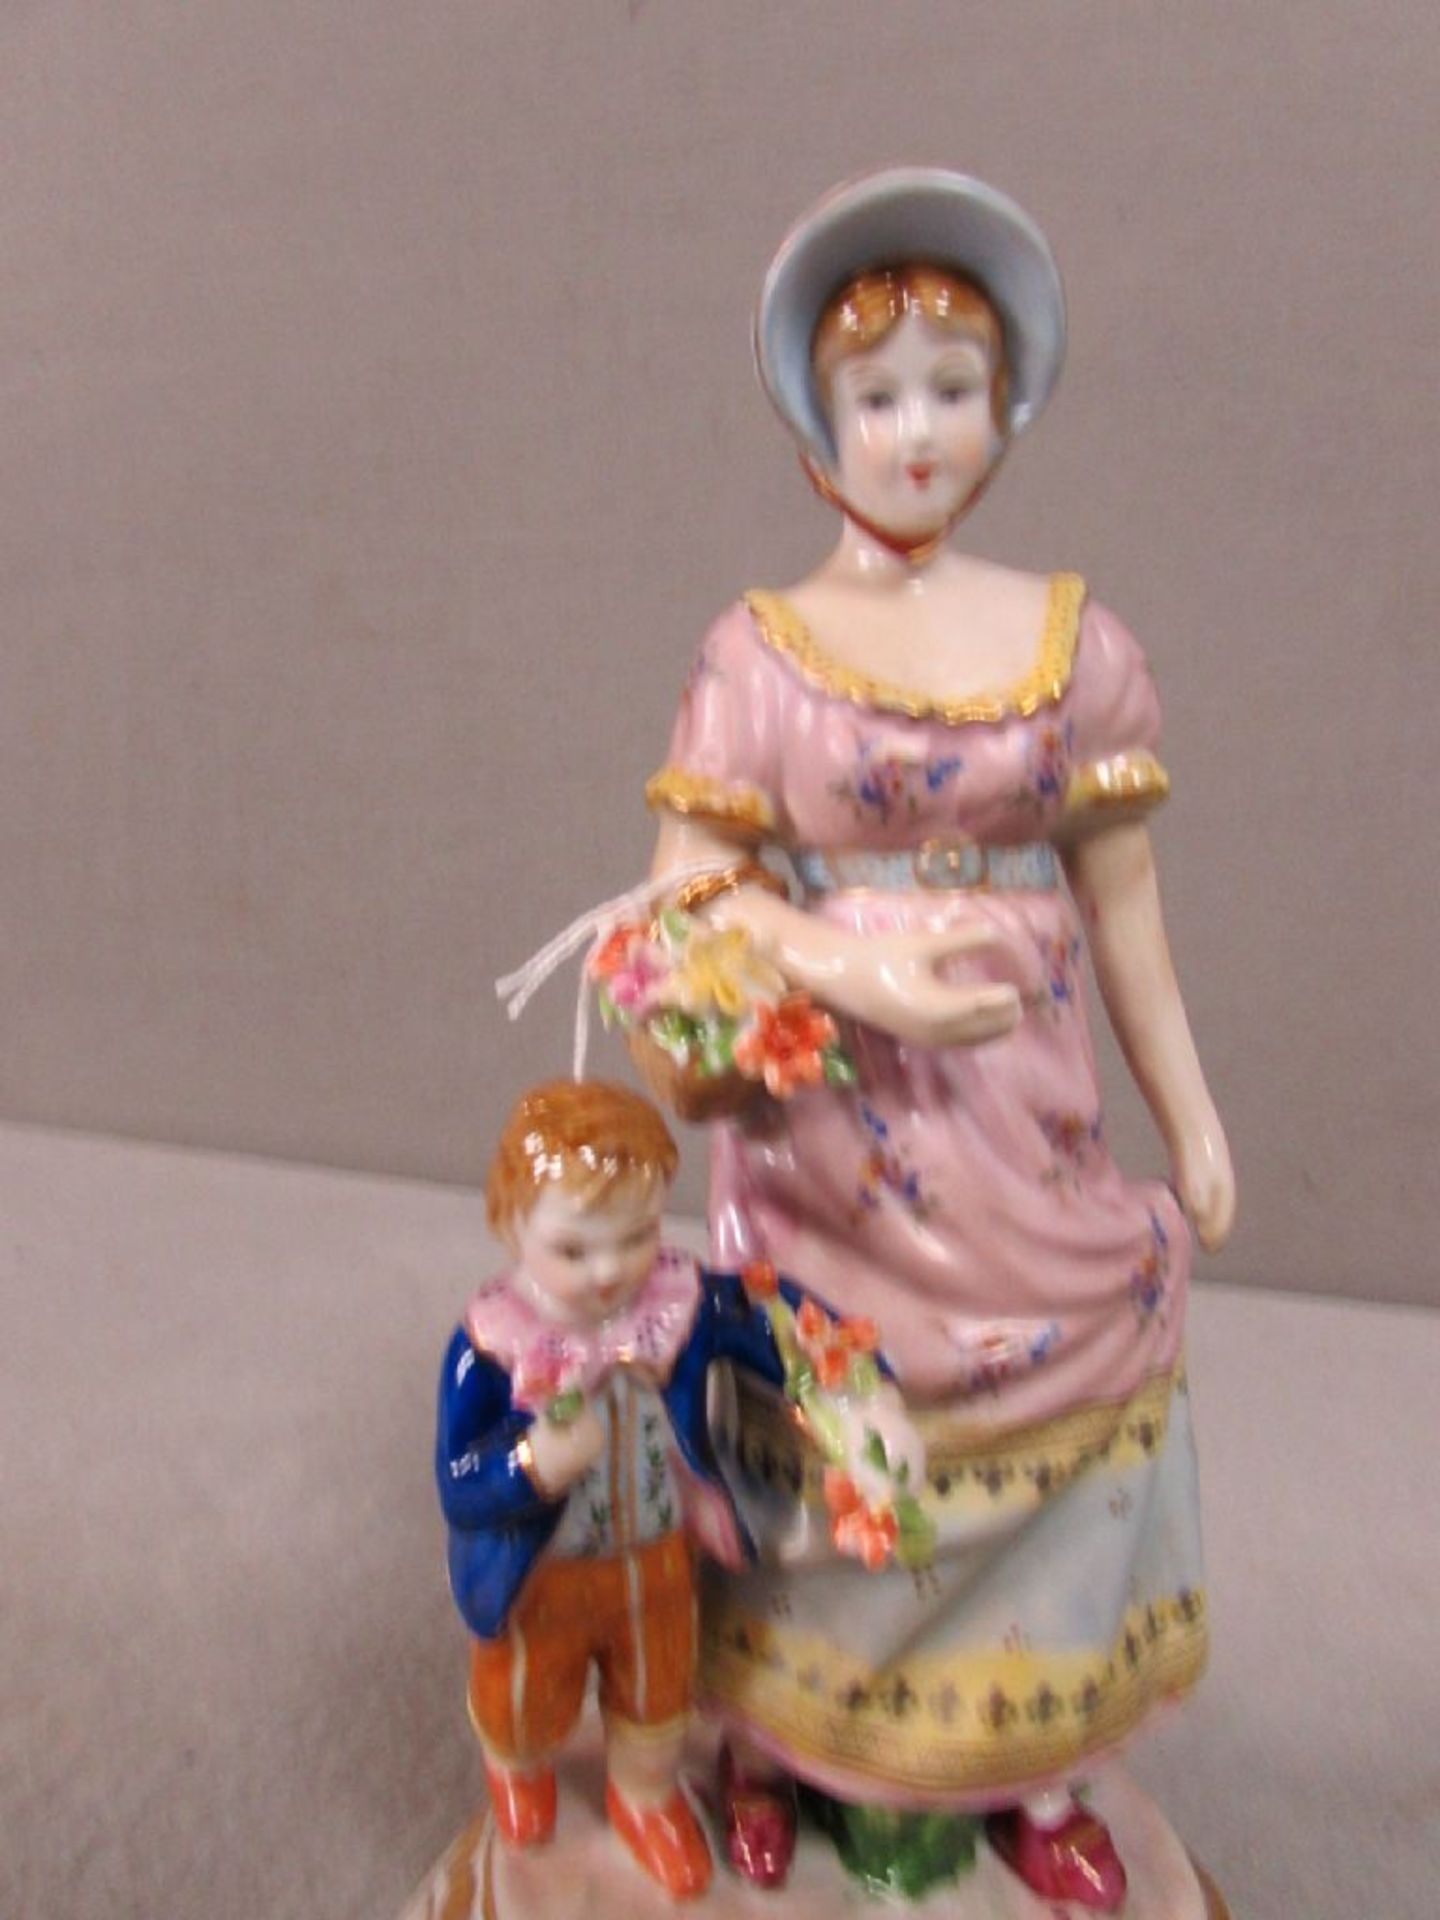 Figurine Mutter mit Kind 29 cm höhe Glasierte Keramik - Image 3 of 3